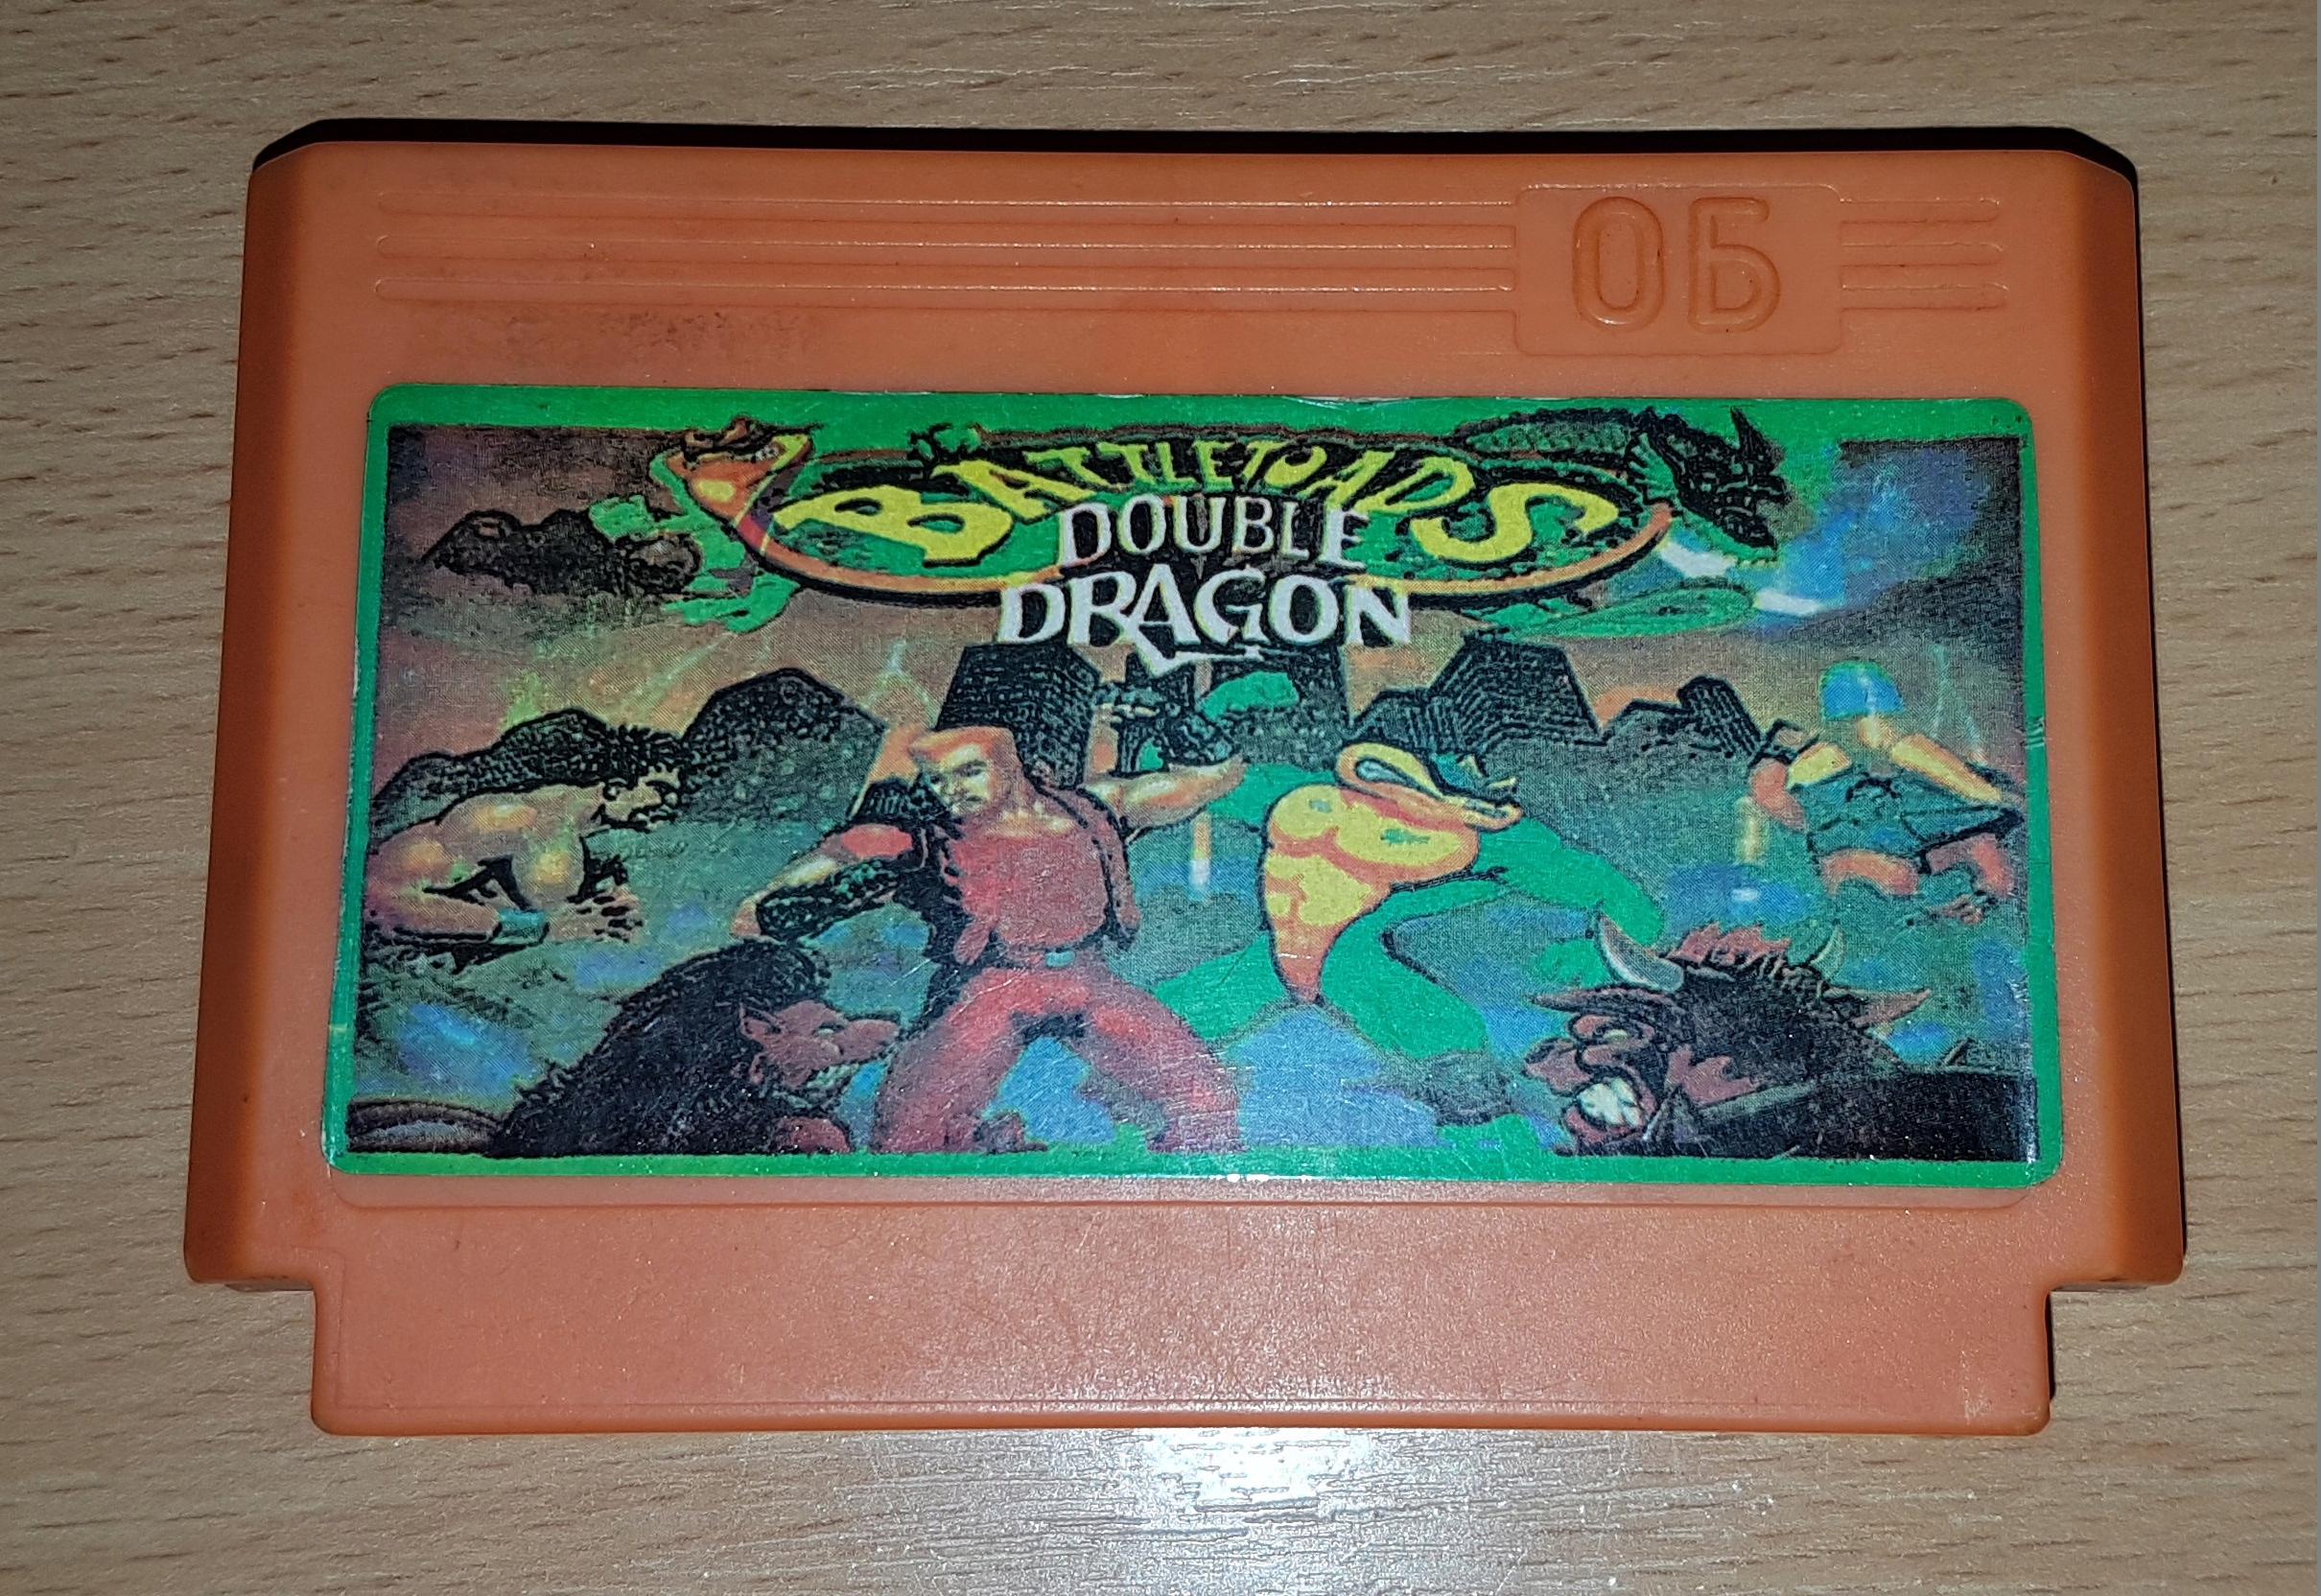 Дабл драгон денди. Battletoads Double Dragon картридж Dendy. Battletoads NES картридж. Картридж Battletoads and Double Dragon. Battletoads сега картридж.